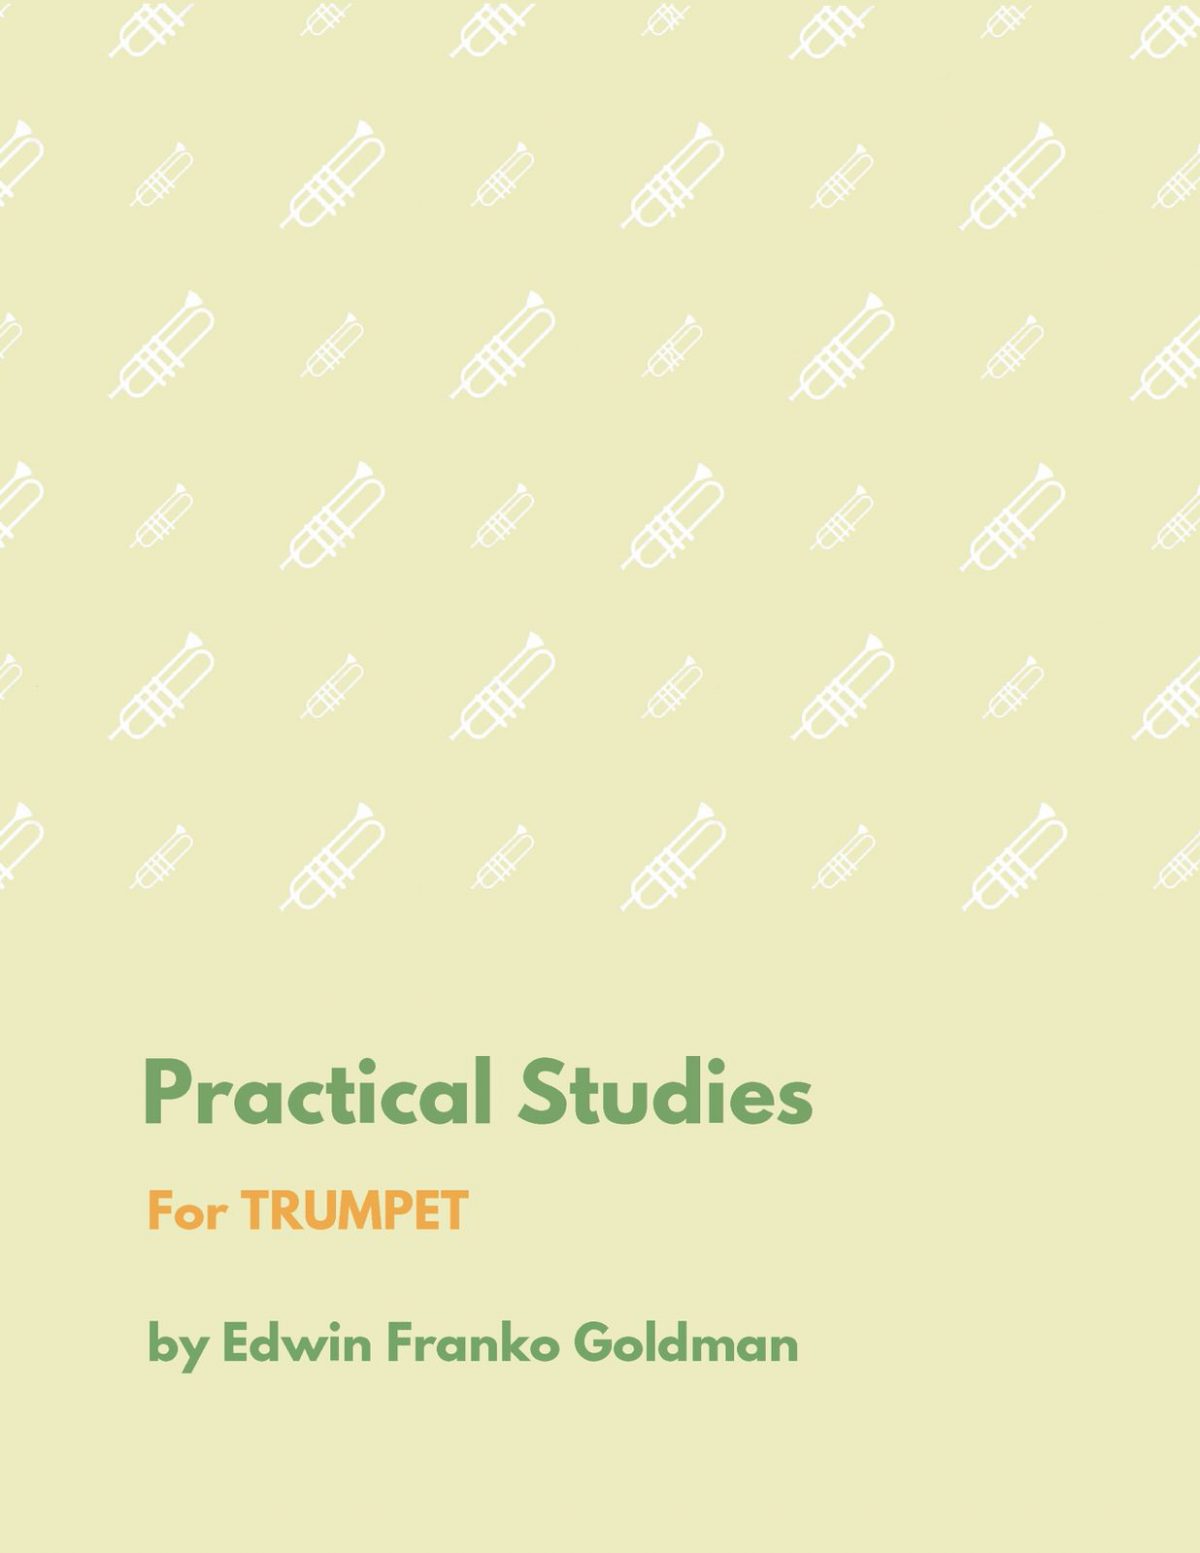 Goldman, Practical Studies For Trumpet-p01